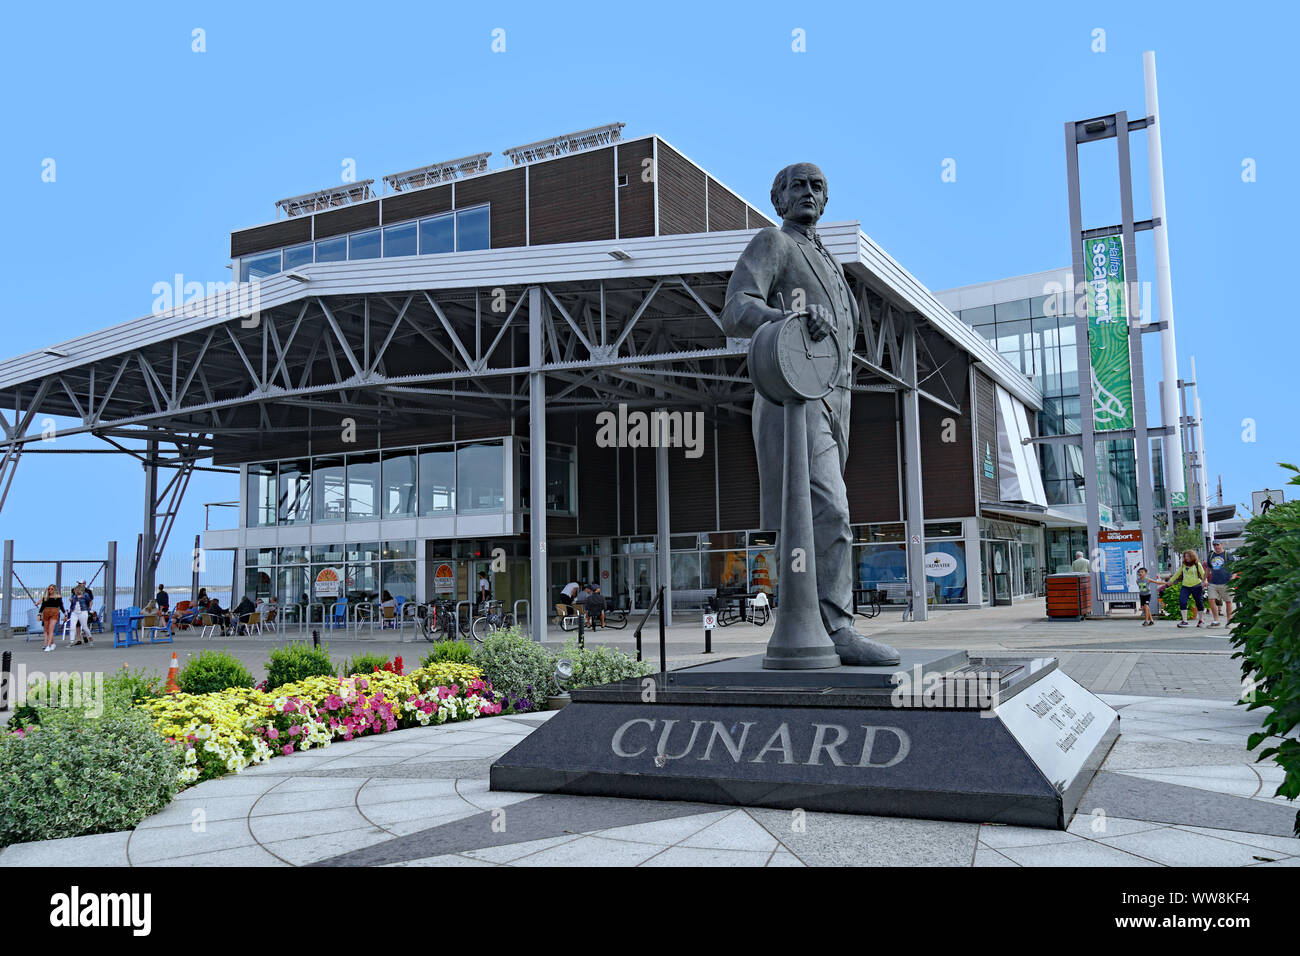 HALIFAX, NOVA SCOTIA - Agosto 2019: Statua di Halifax nativo, magnate spedizione Samuel Cunard, accanto a Halifax seaport negozi. Foto Stock